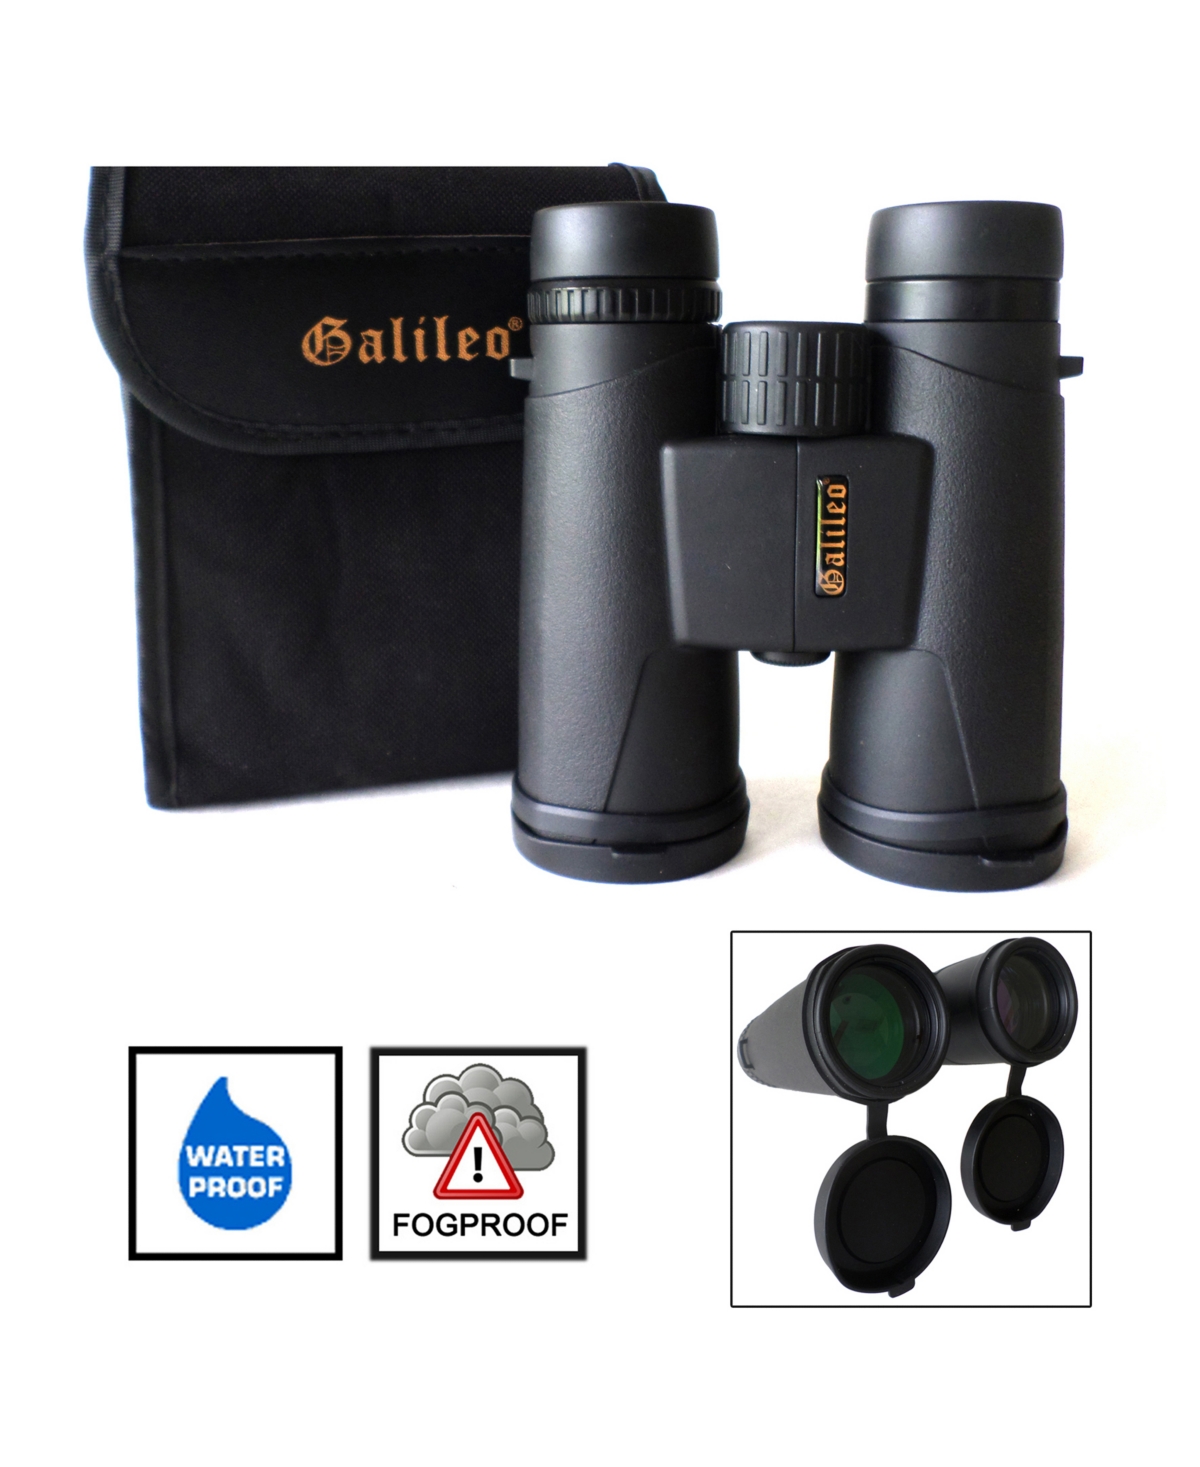 Galileo 10 Power Nitrogen Purged Fog And Waterproof Binoculars And 42mm Prisms In Black